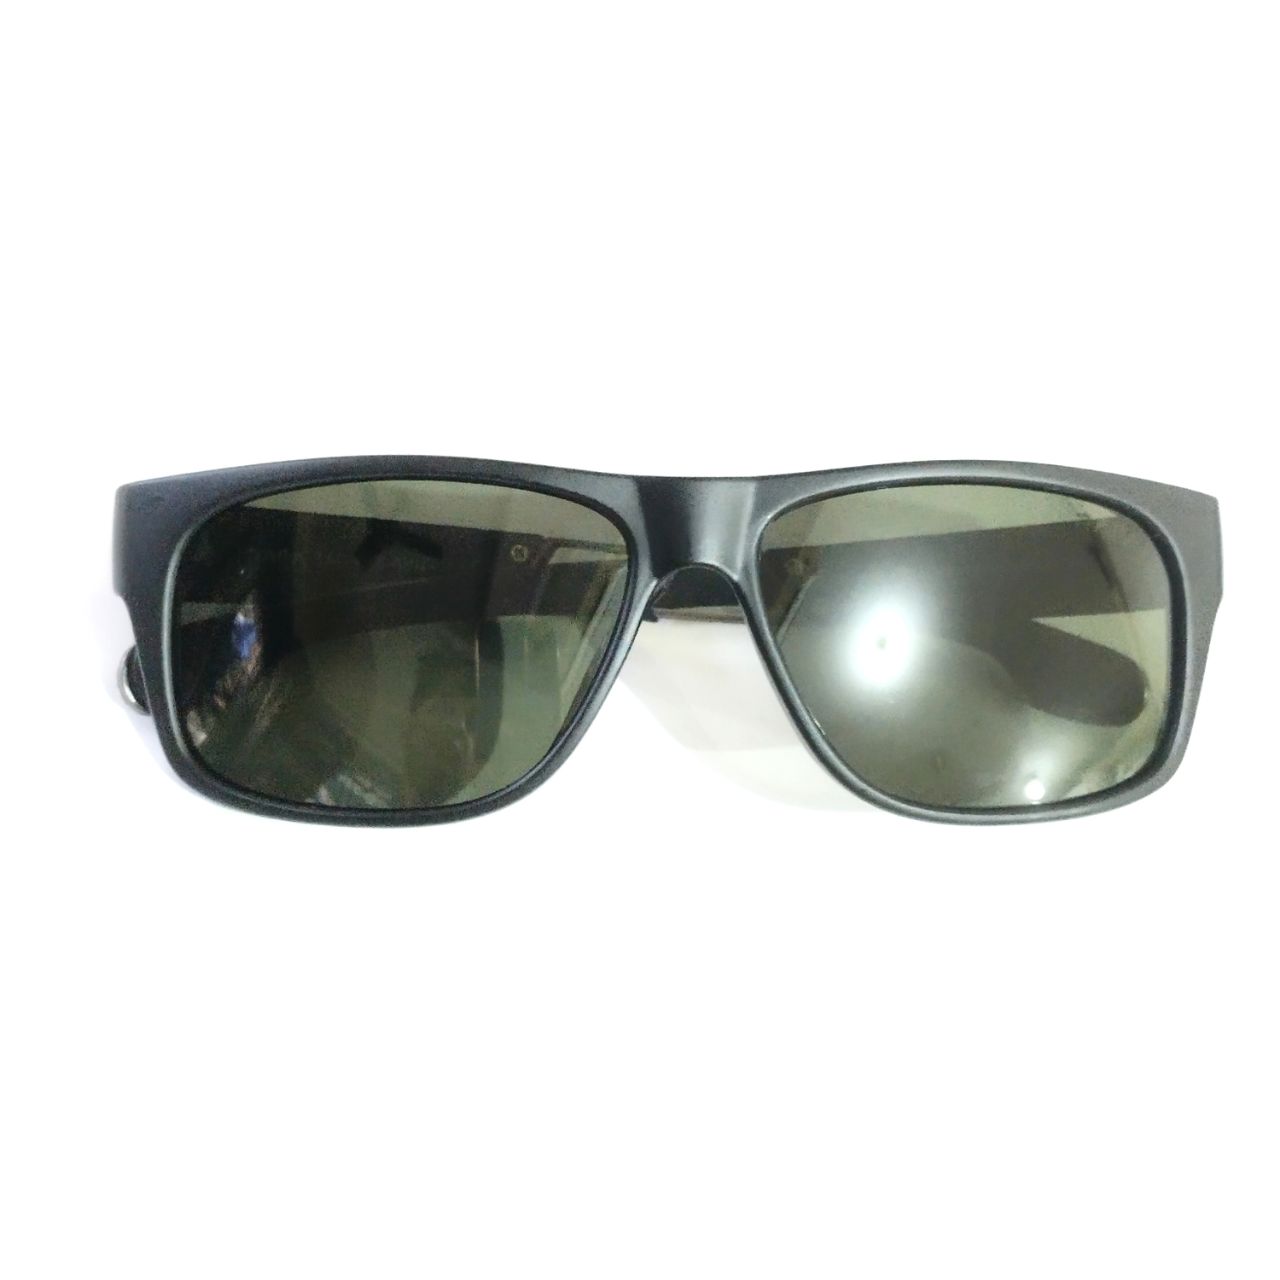 Black Frame Green Lens Classic Rectangle Polarized Sunglasses for Men and Women